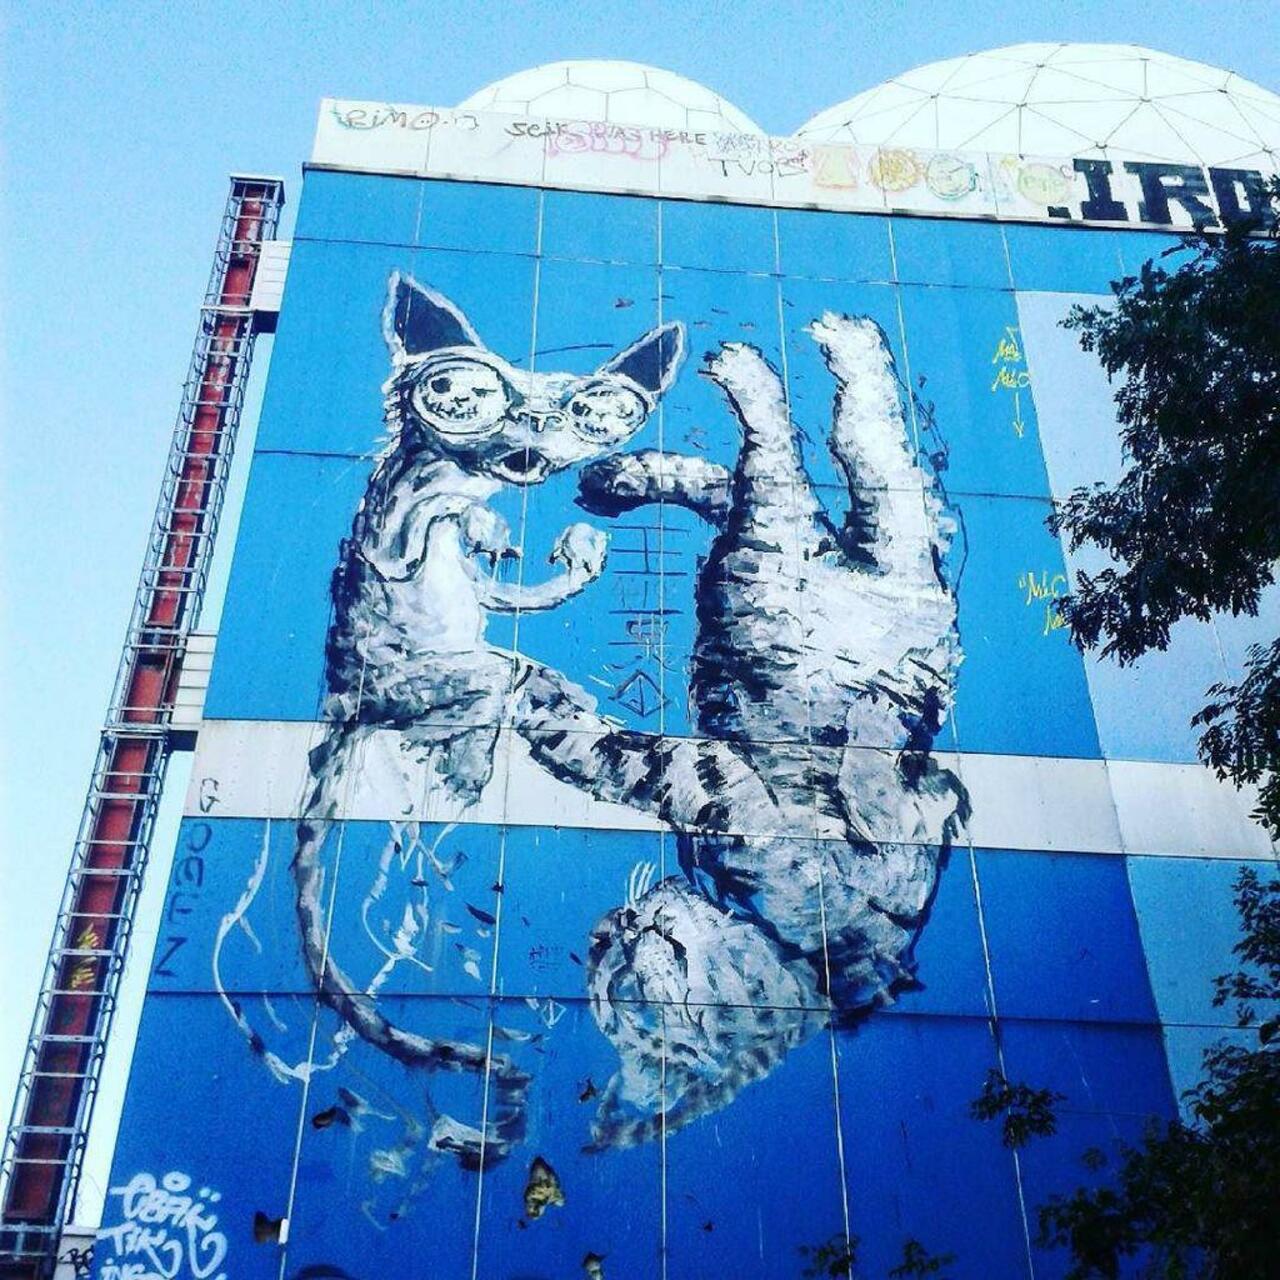 #streetart @teufelsberg by @himbad and @alanizart #berlin #berlinstreetart #Teufelsberg #urbanart #graffiti #cat #s… http://t.co/V5yDI2M9bz